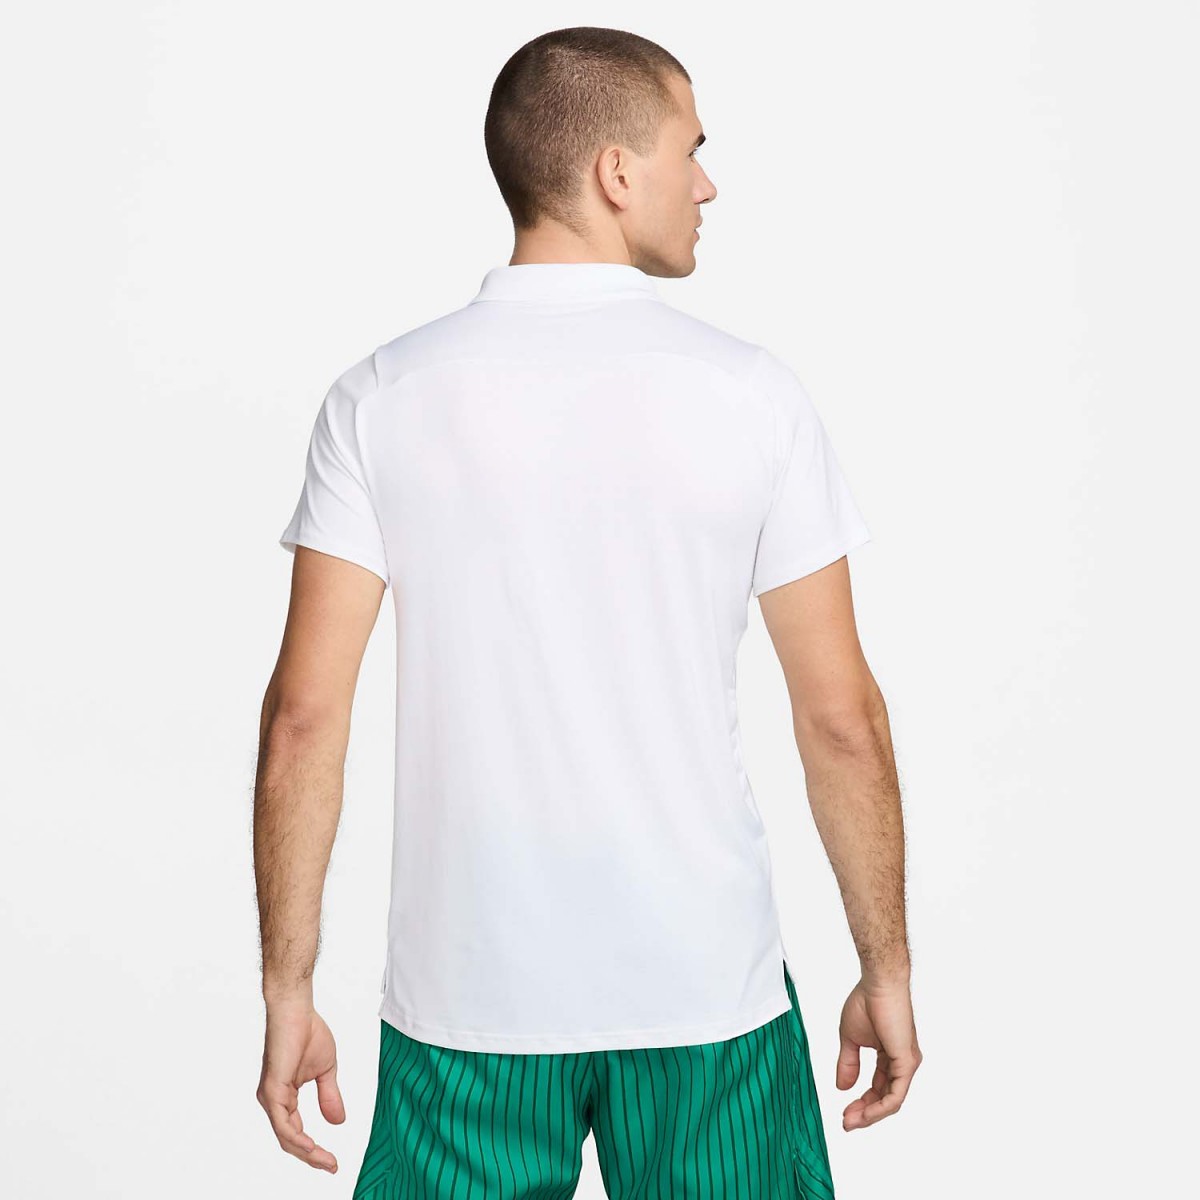 Теннисная футболка мужская Nike Court Advantage Polo white/malachite